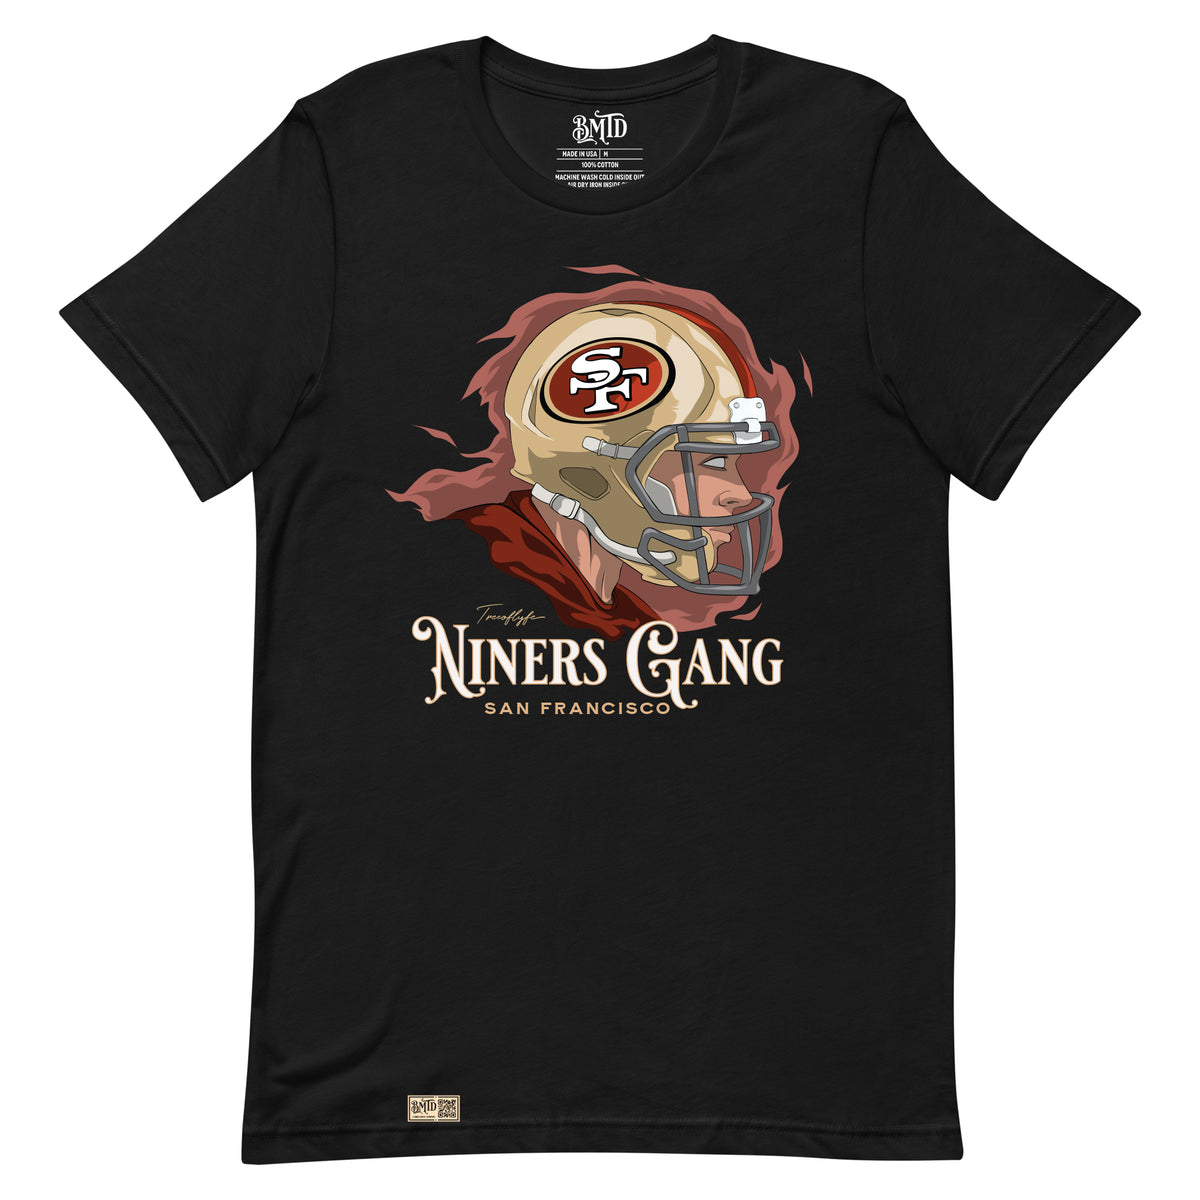 San Francisco Niners Gang Apparel Art T-shirt Exhibit 02